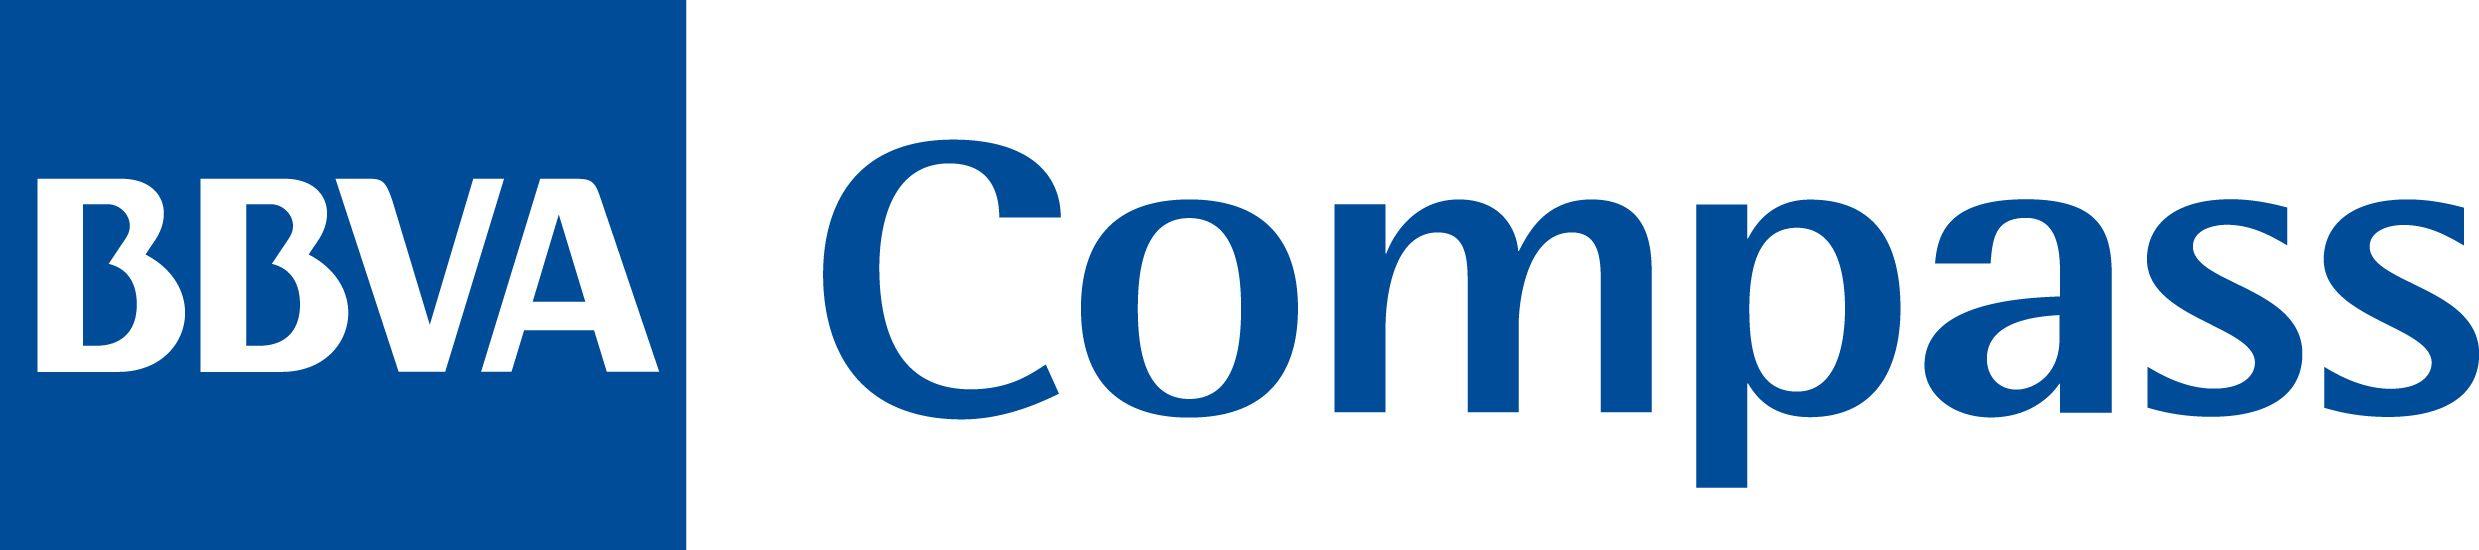 BBVA Compass Logo - File:BBVA Compass Logo.jpg - Wikimedia Commons